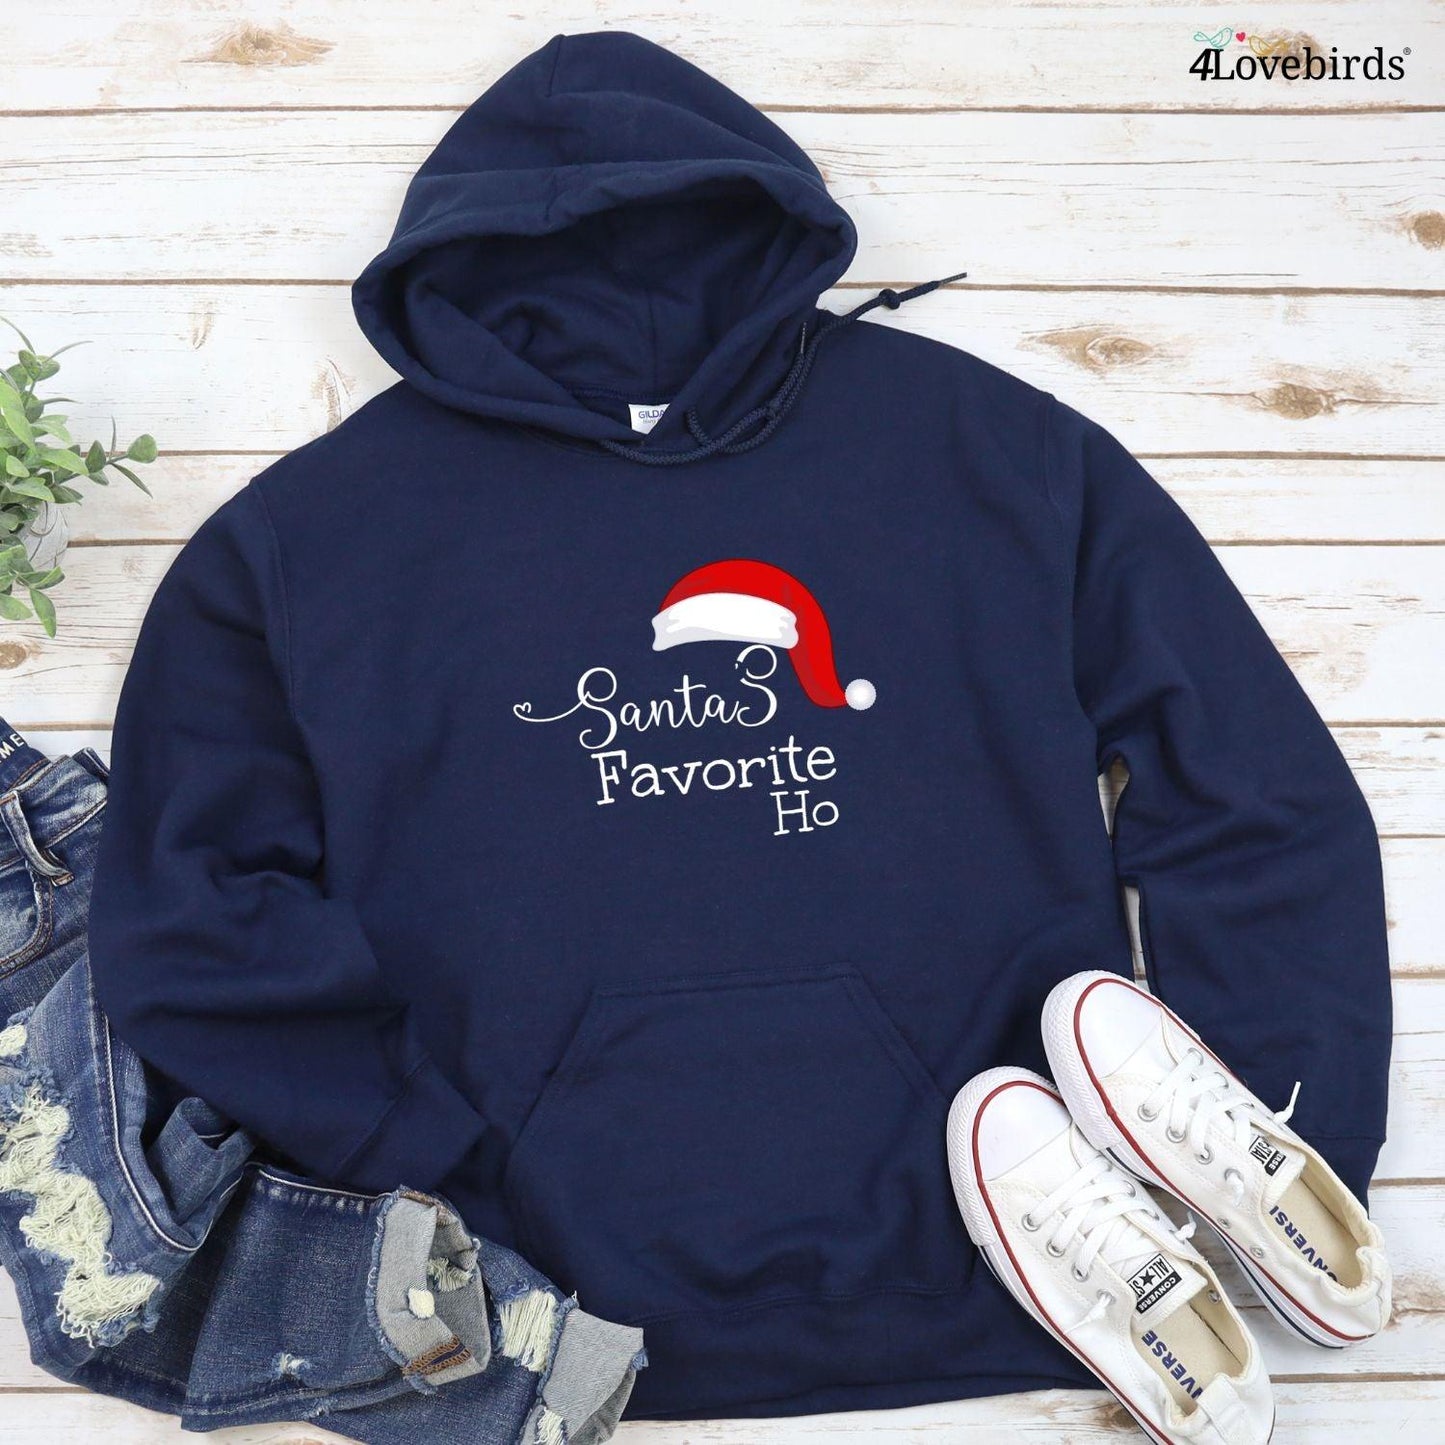 Santa & Santa's Favorite Ho Matching Christmas Set: Outfits for Couples! - 4Lovebirds